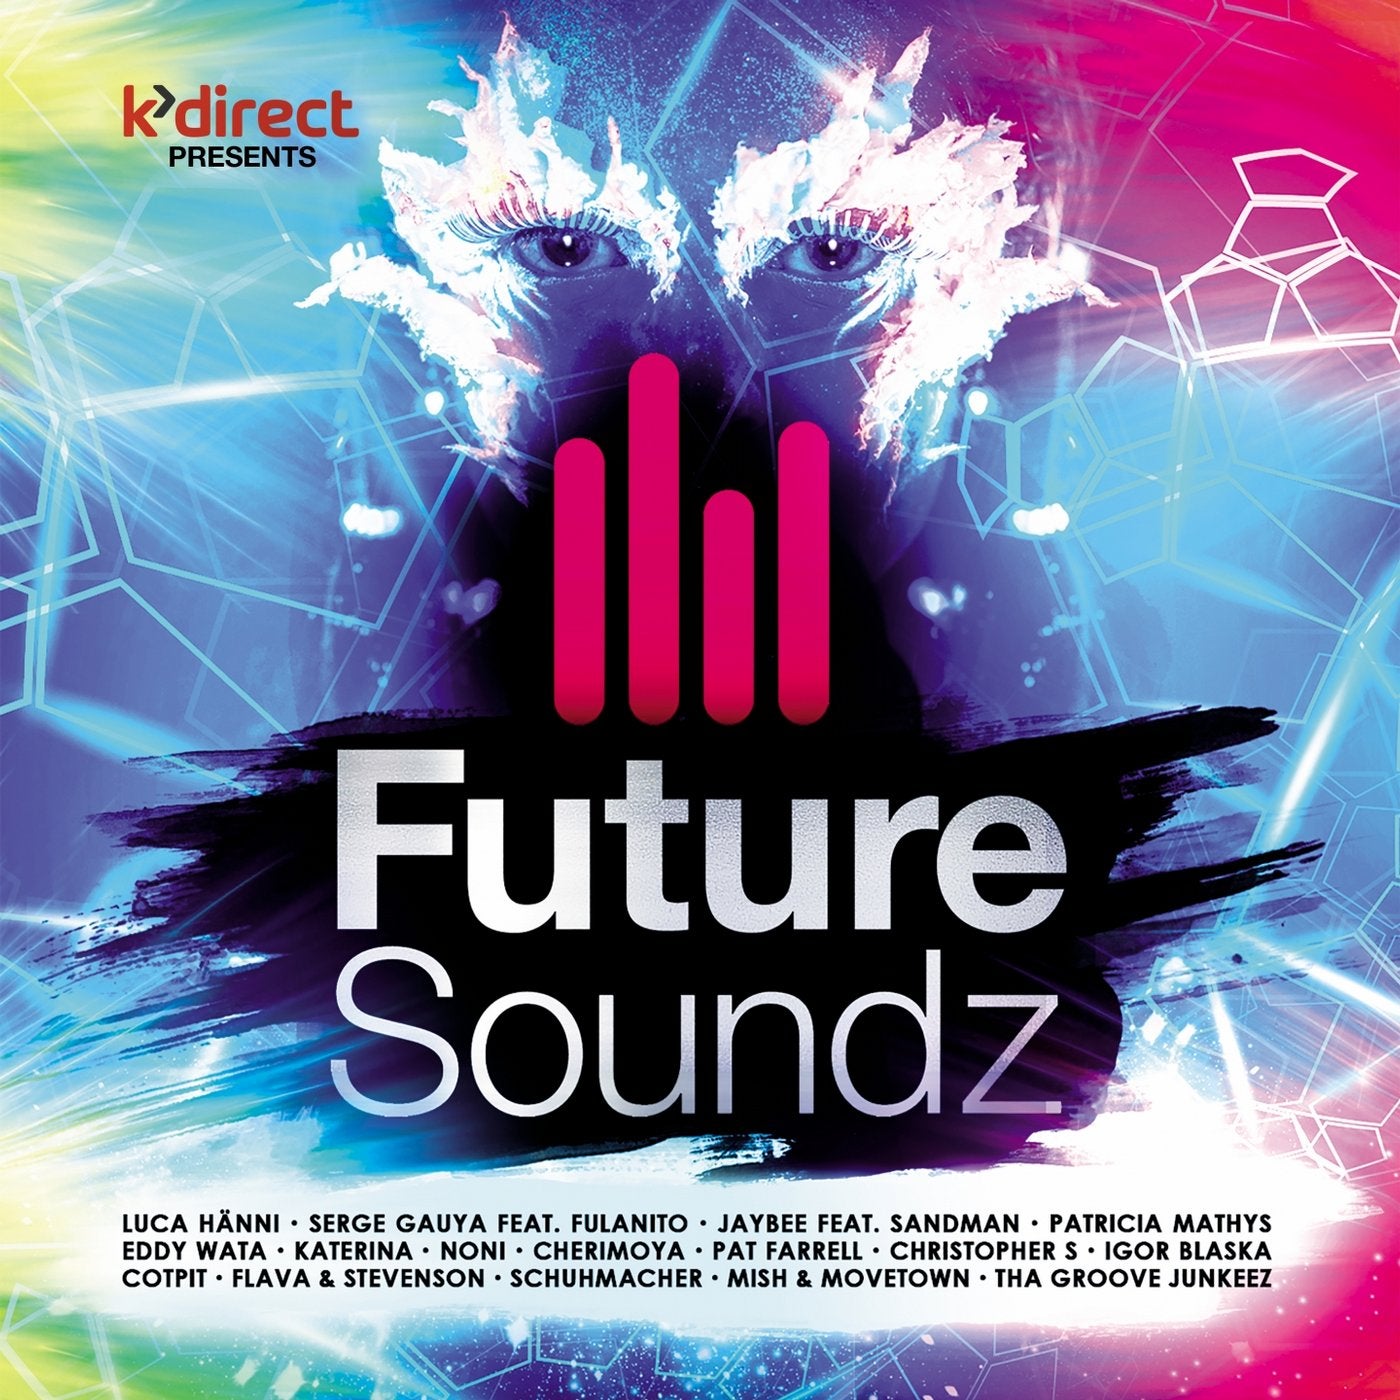 Future Soundz